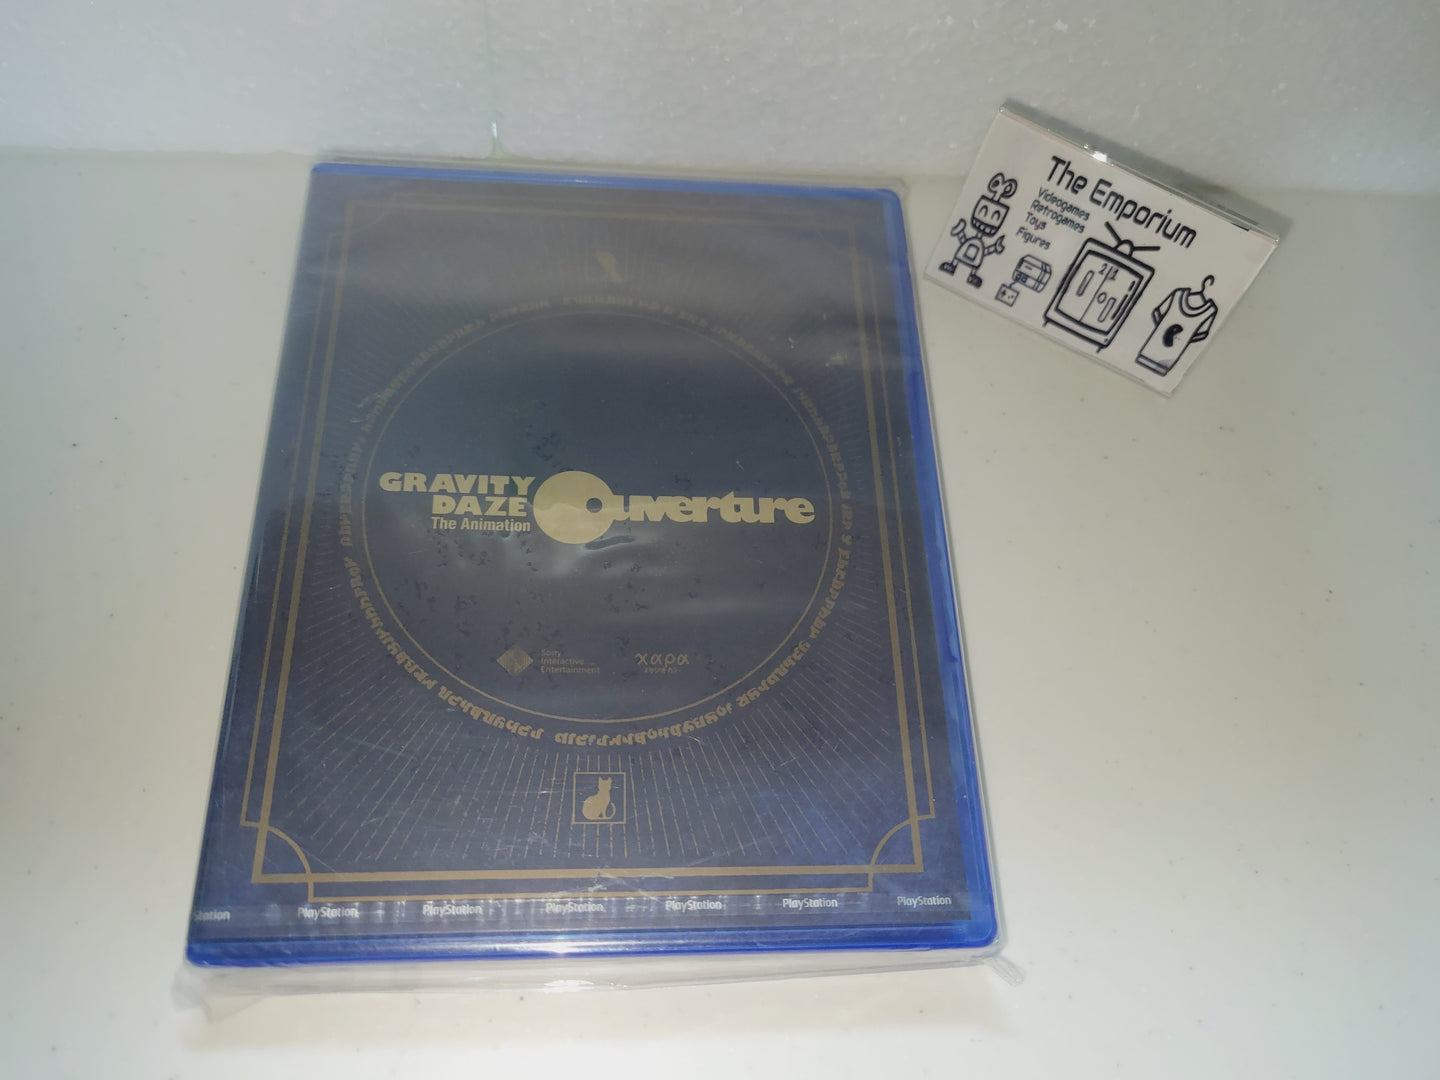 Gravity Daze Ouverture DVD - video DVD